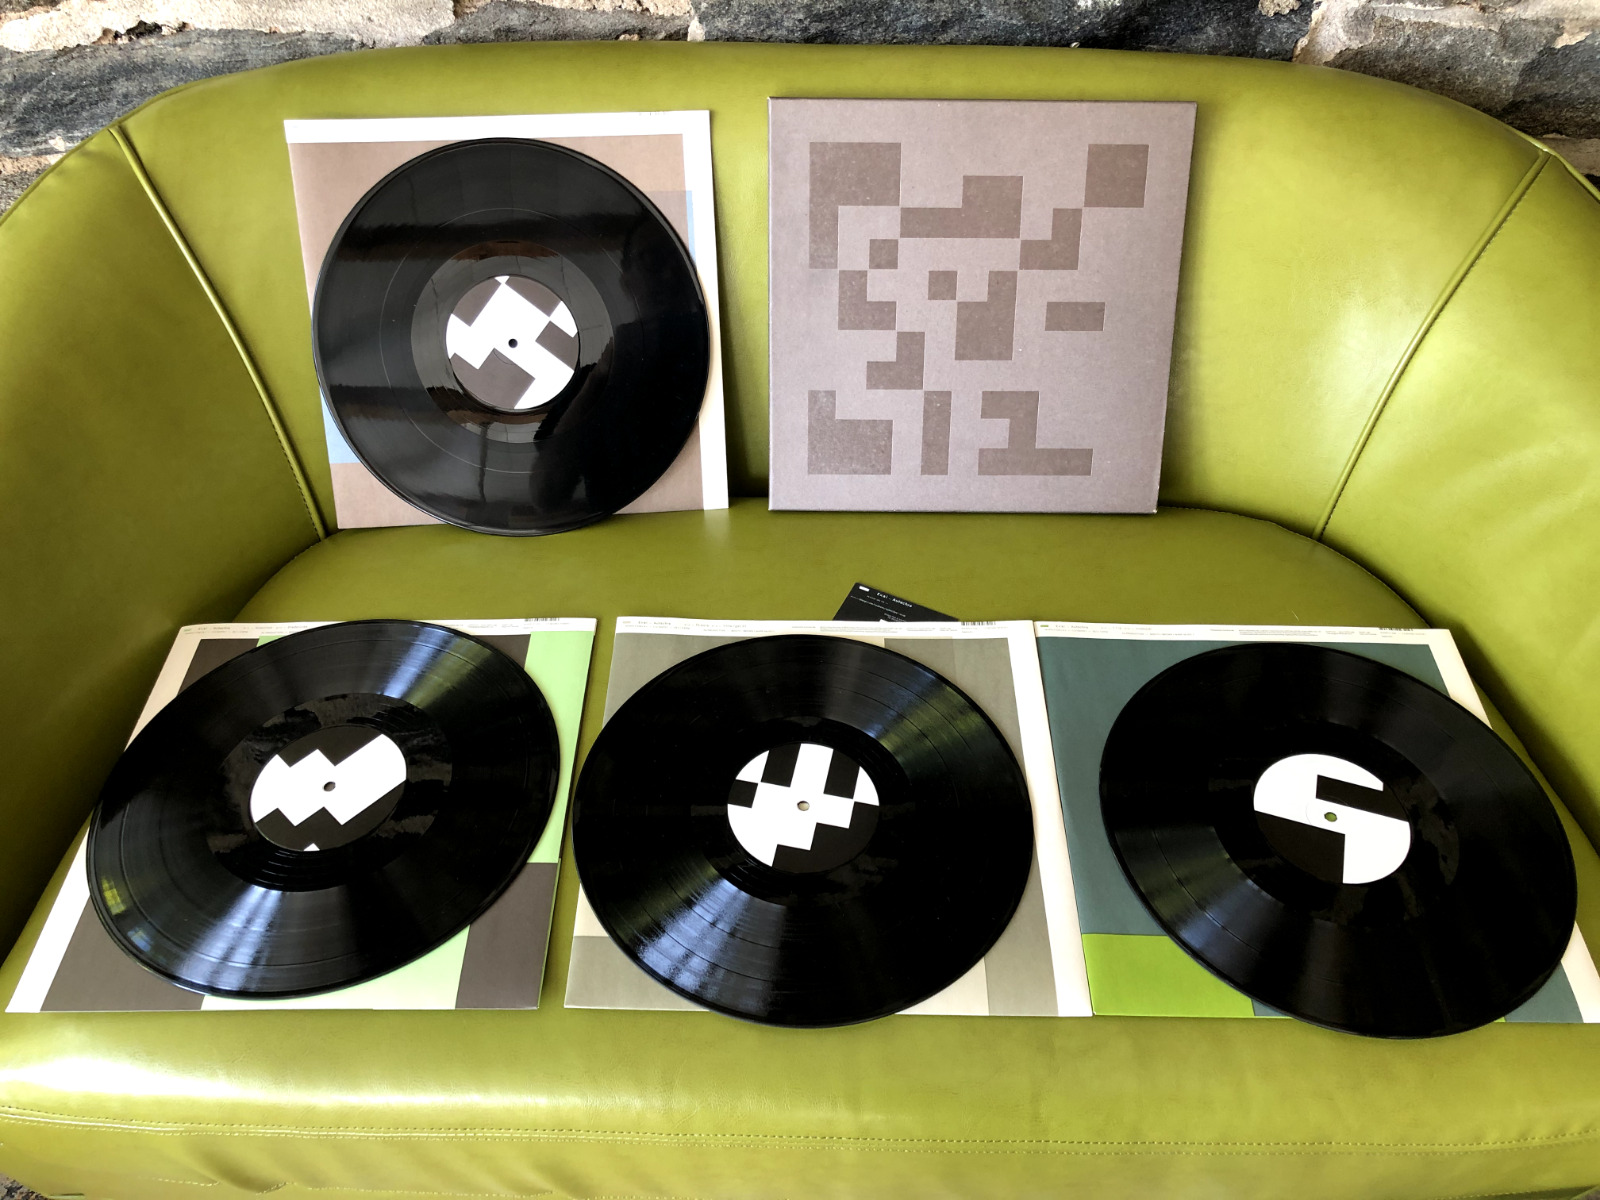 Autechre - Exai - (4 x LP Box Set) - Warp Records IDM, Braindance, Aphex Twin